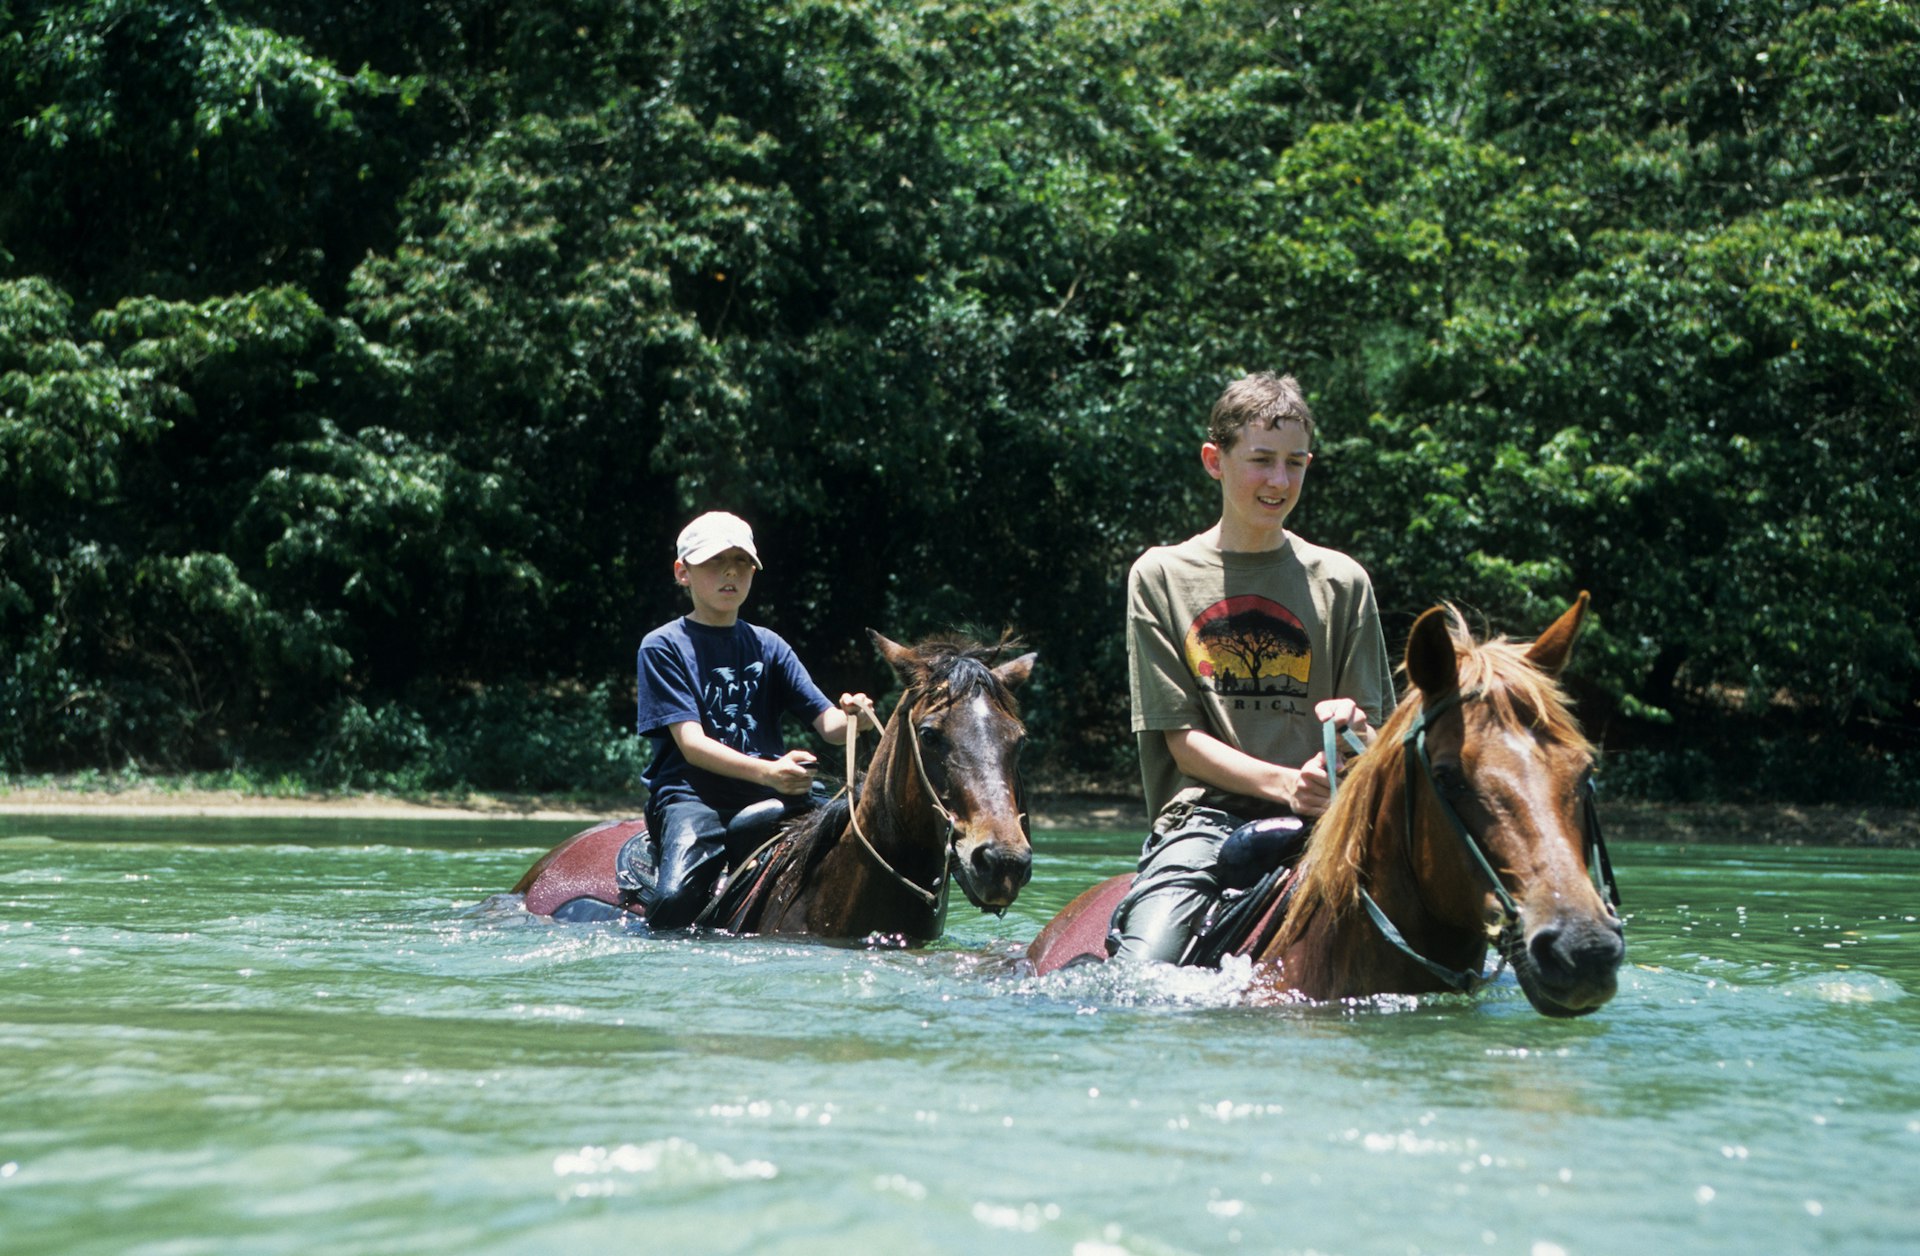 Children riding horses through a river